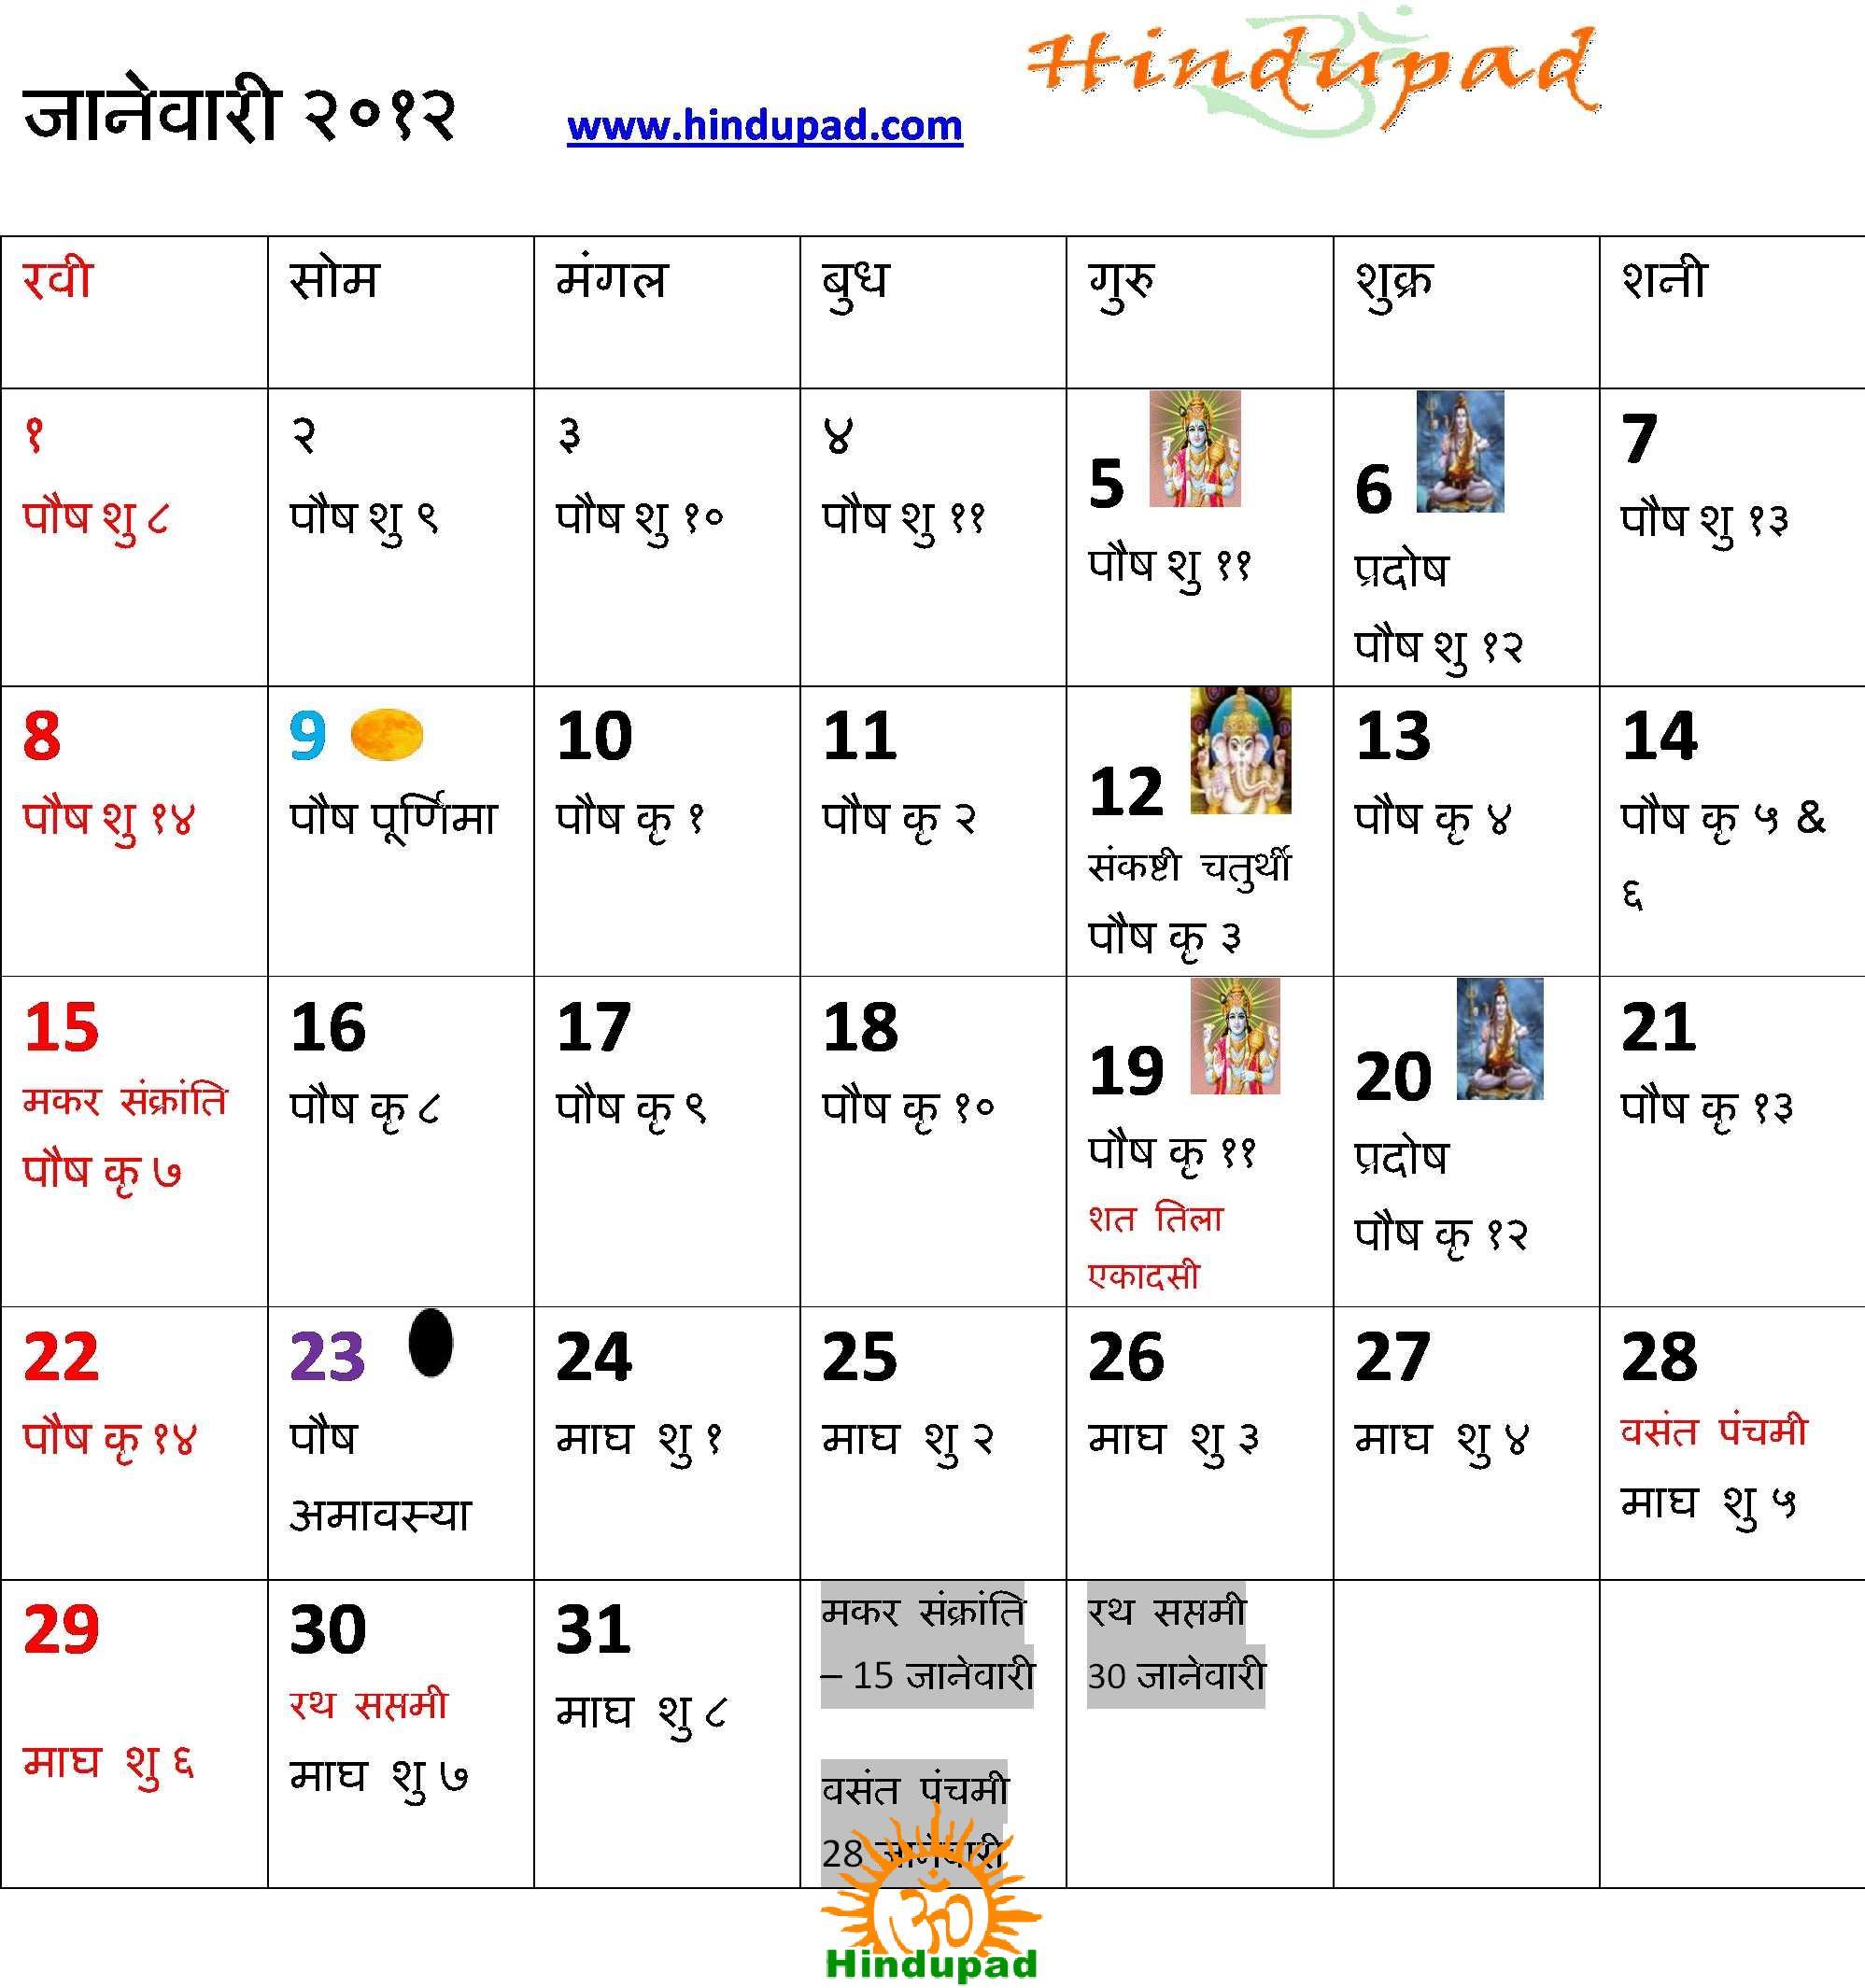 Hindu Panchang Calendar 2013 Pdf cineheavy